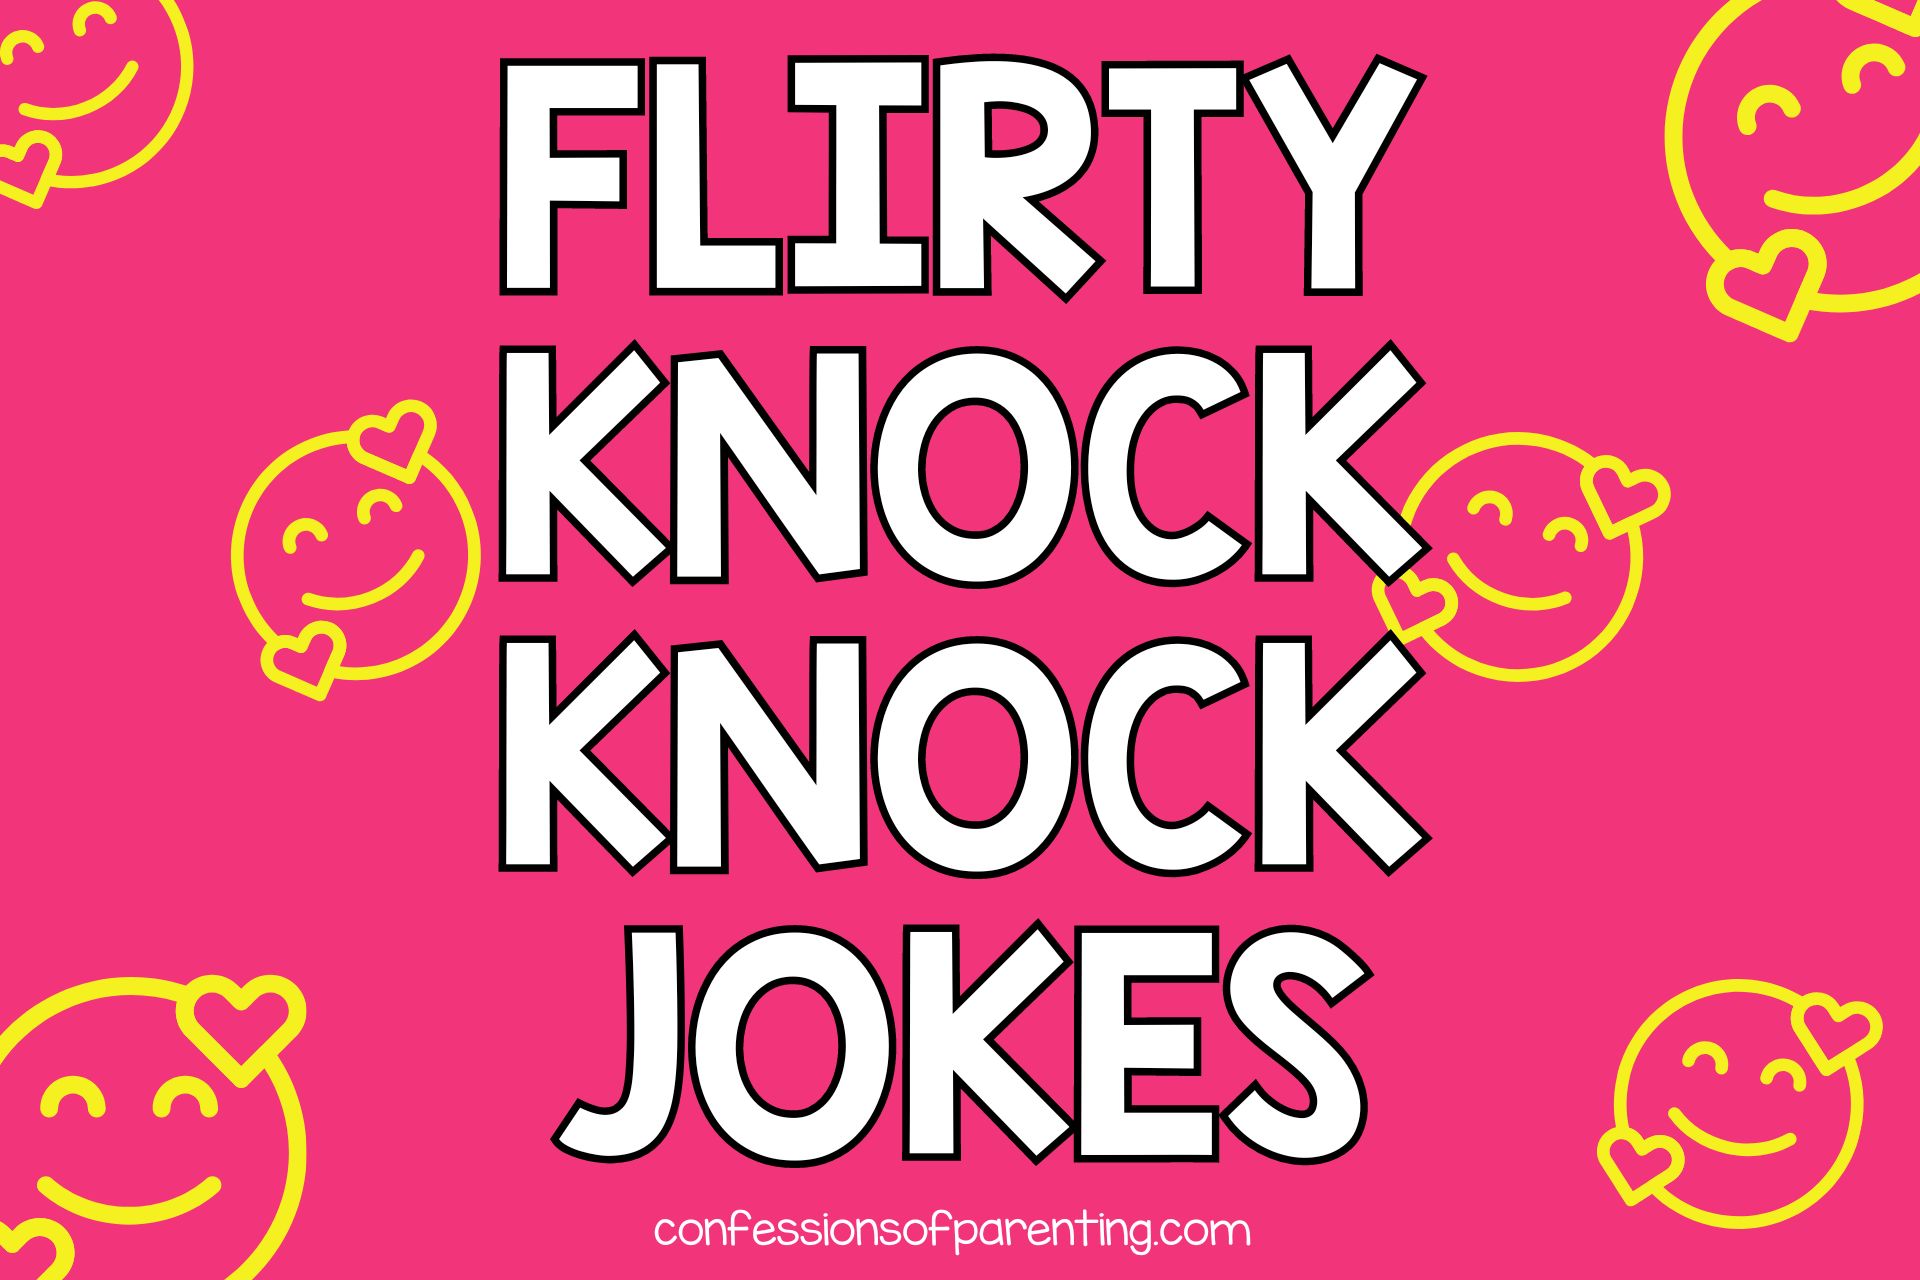 Best of Filthy knock knock jokes